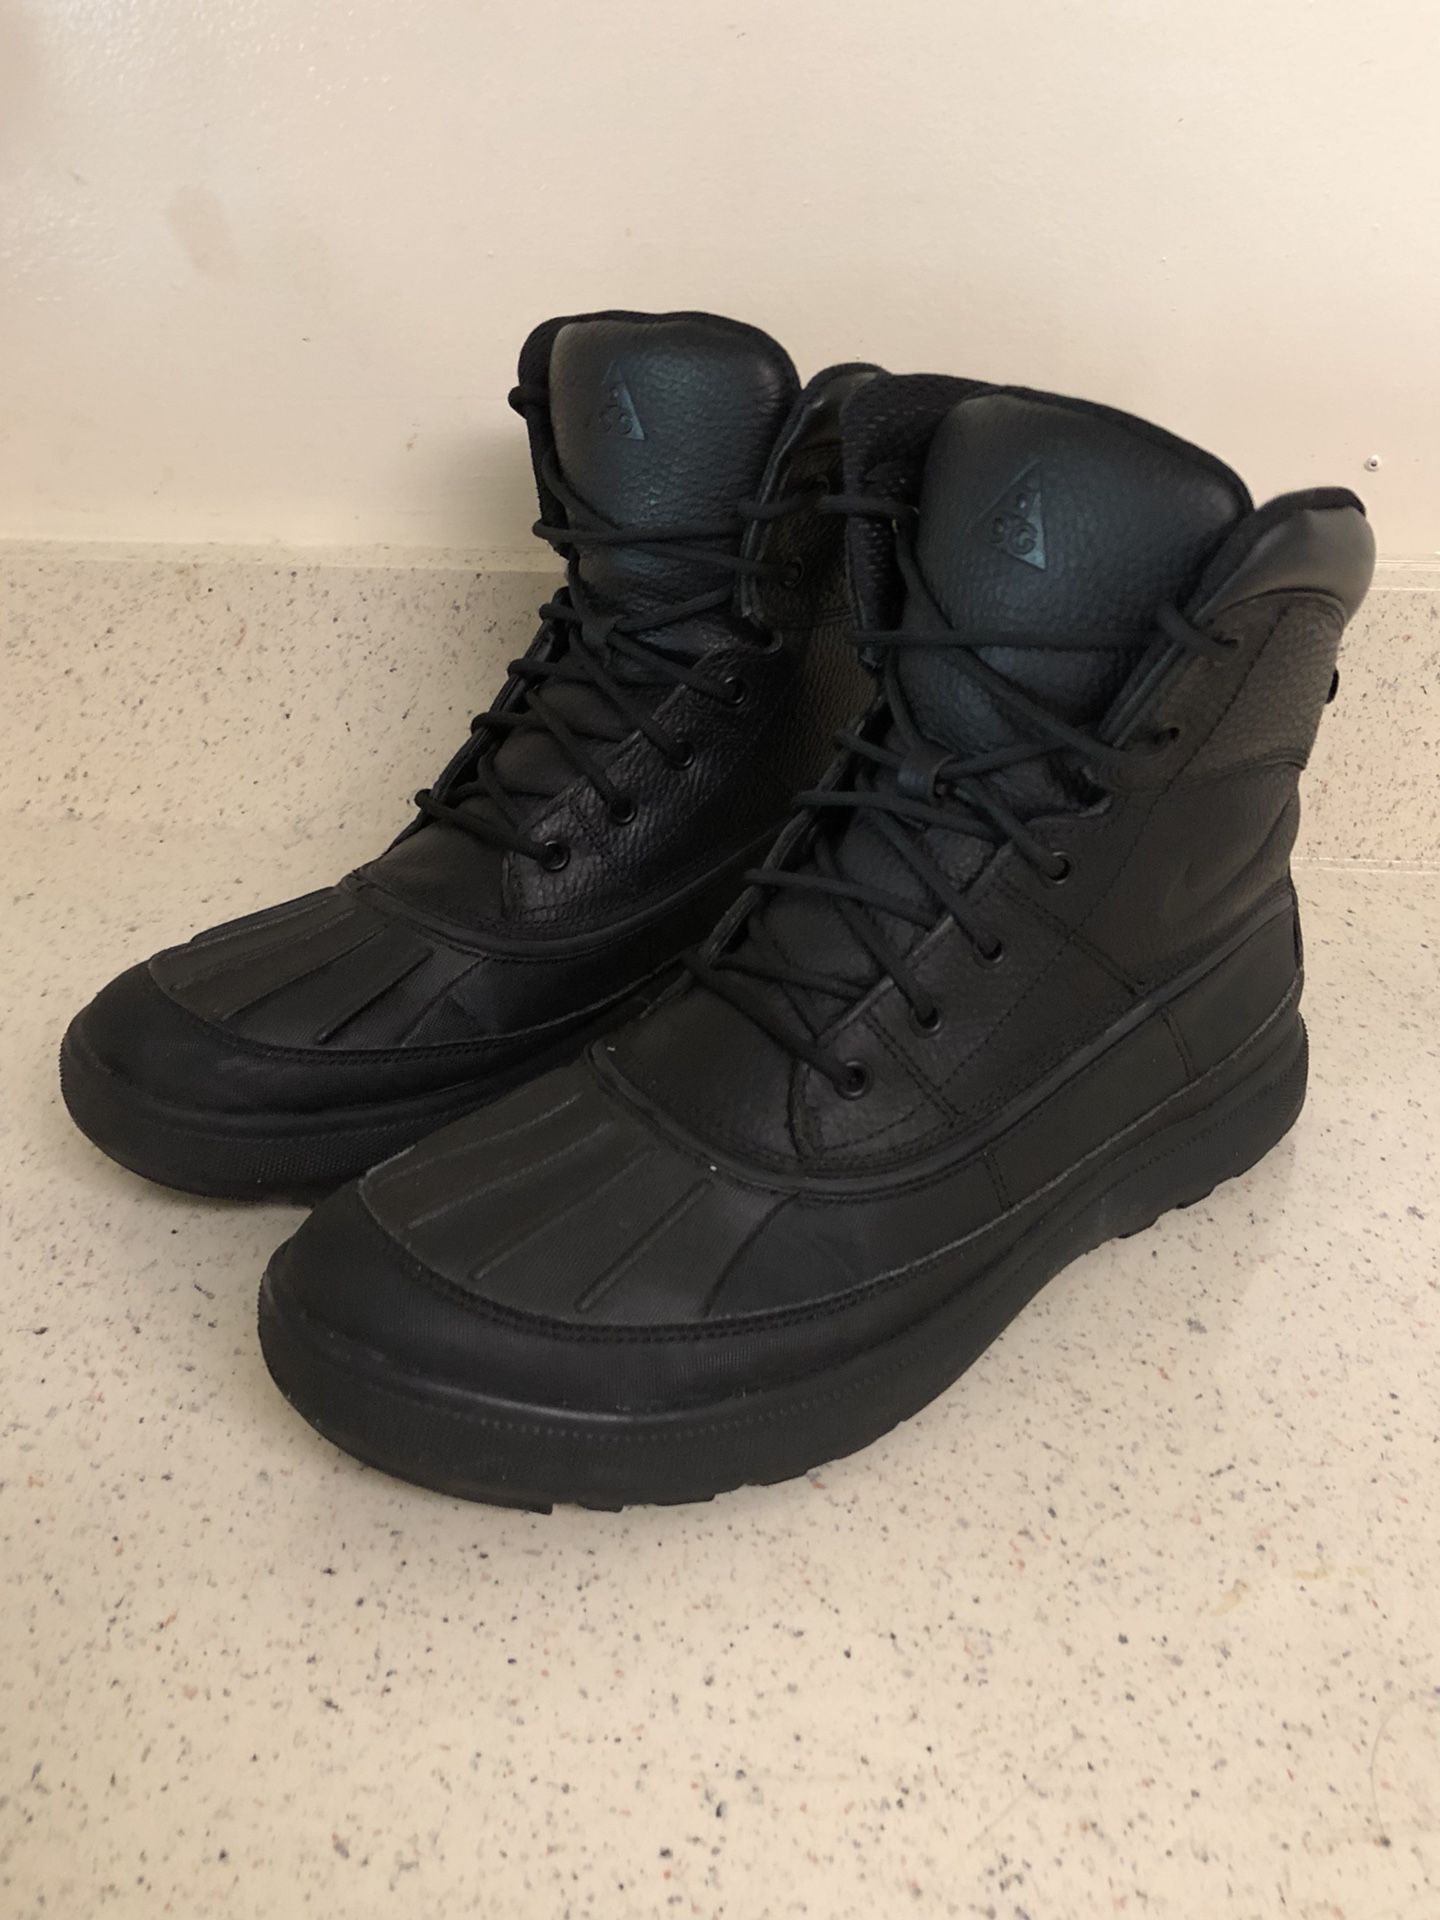 Nike ACG boots men’s size 10.5